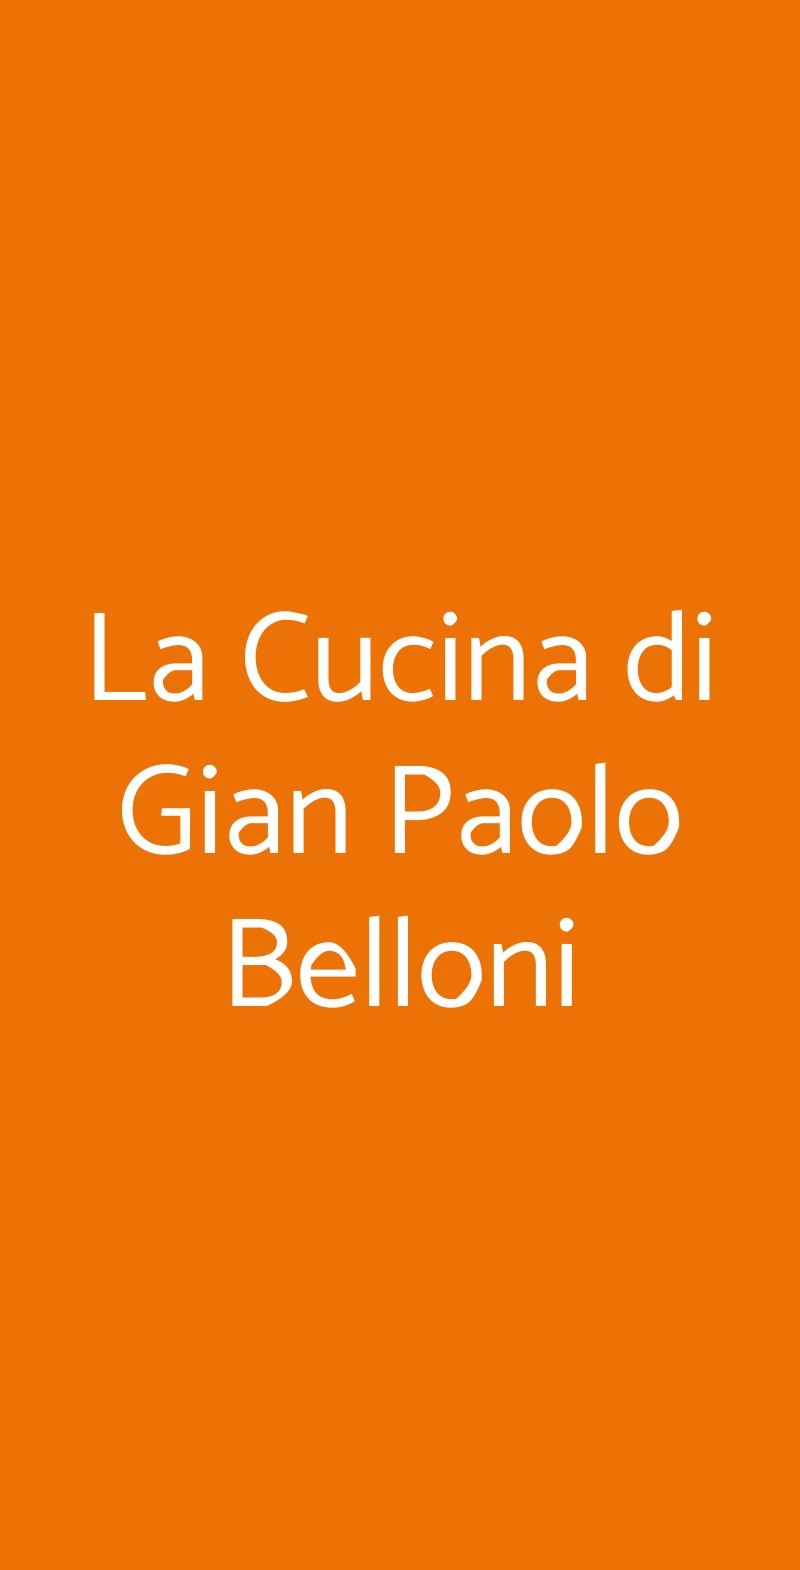 La Cucina di Gian Paolo Belloni Pieve Ligure menù 1 pagina